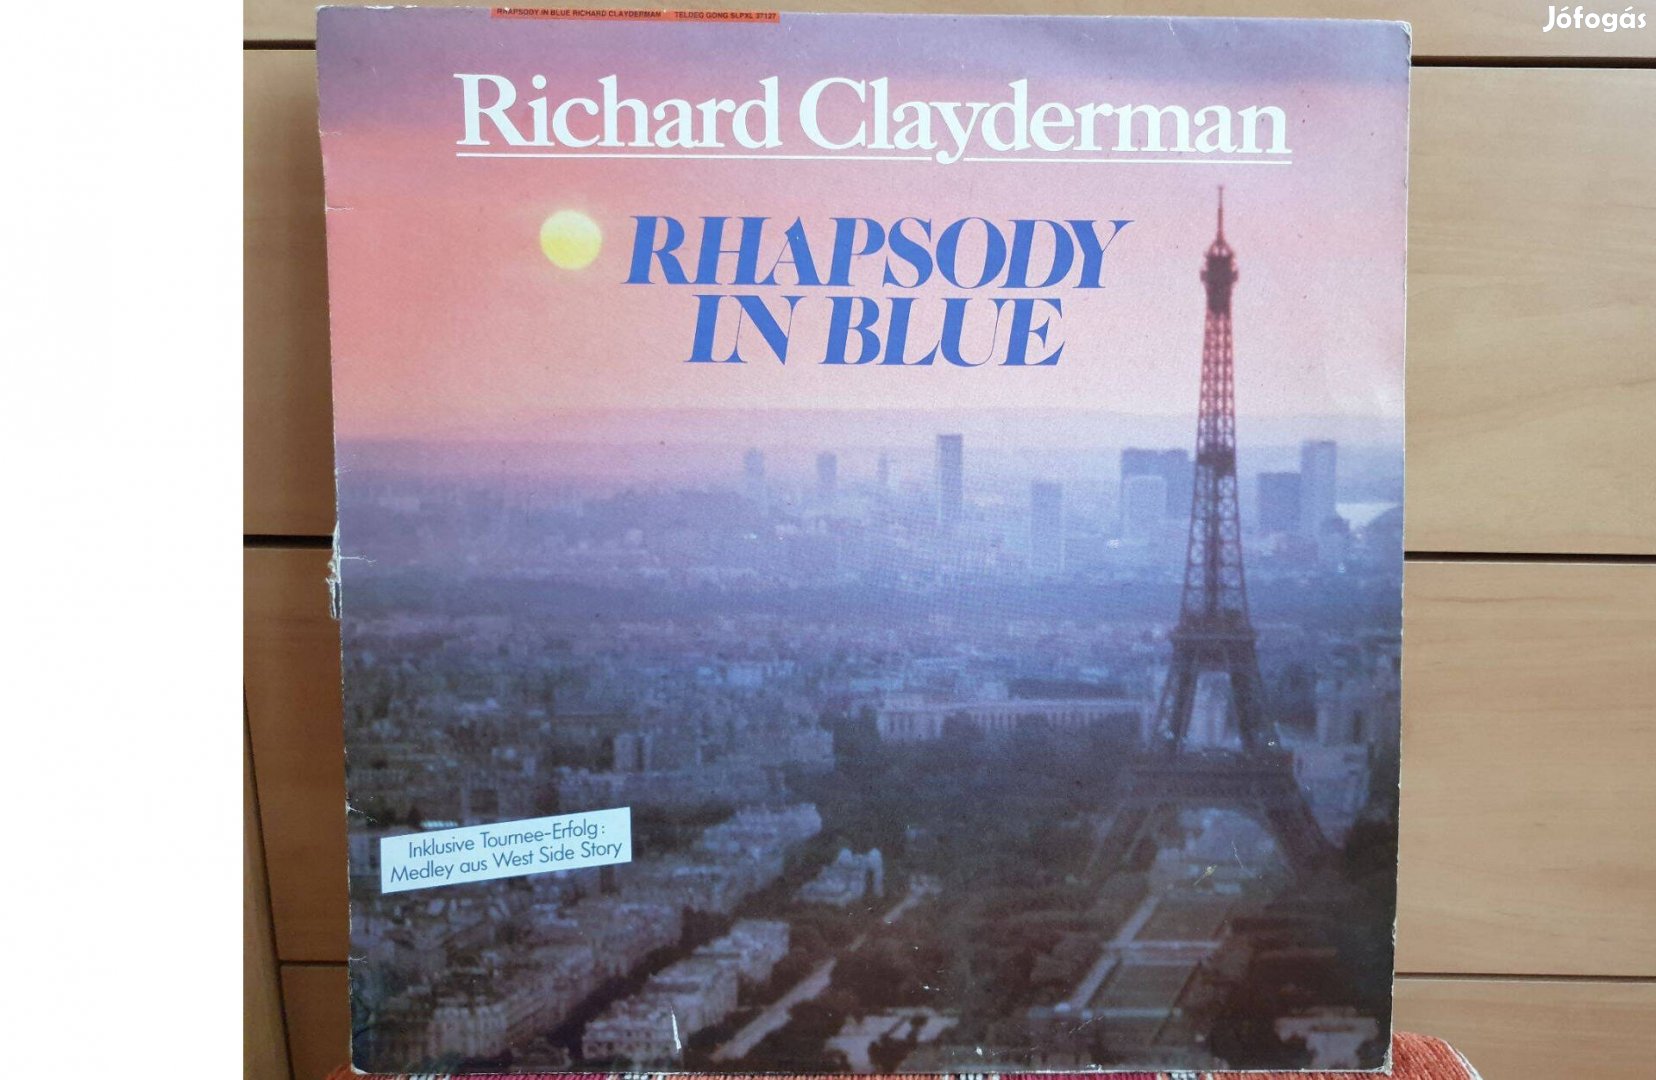 Richard Clayderman - Rhapsody In Blue hanglemez bakelit lemez Vinyl